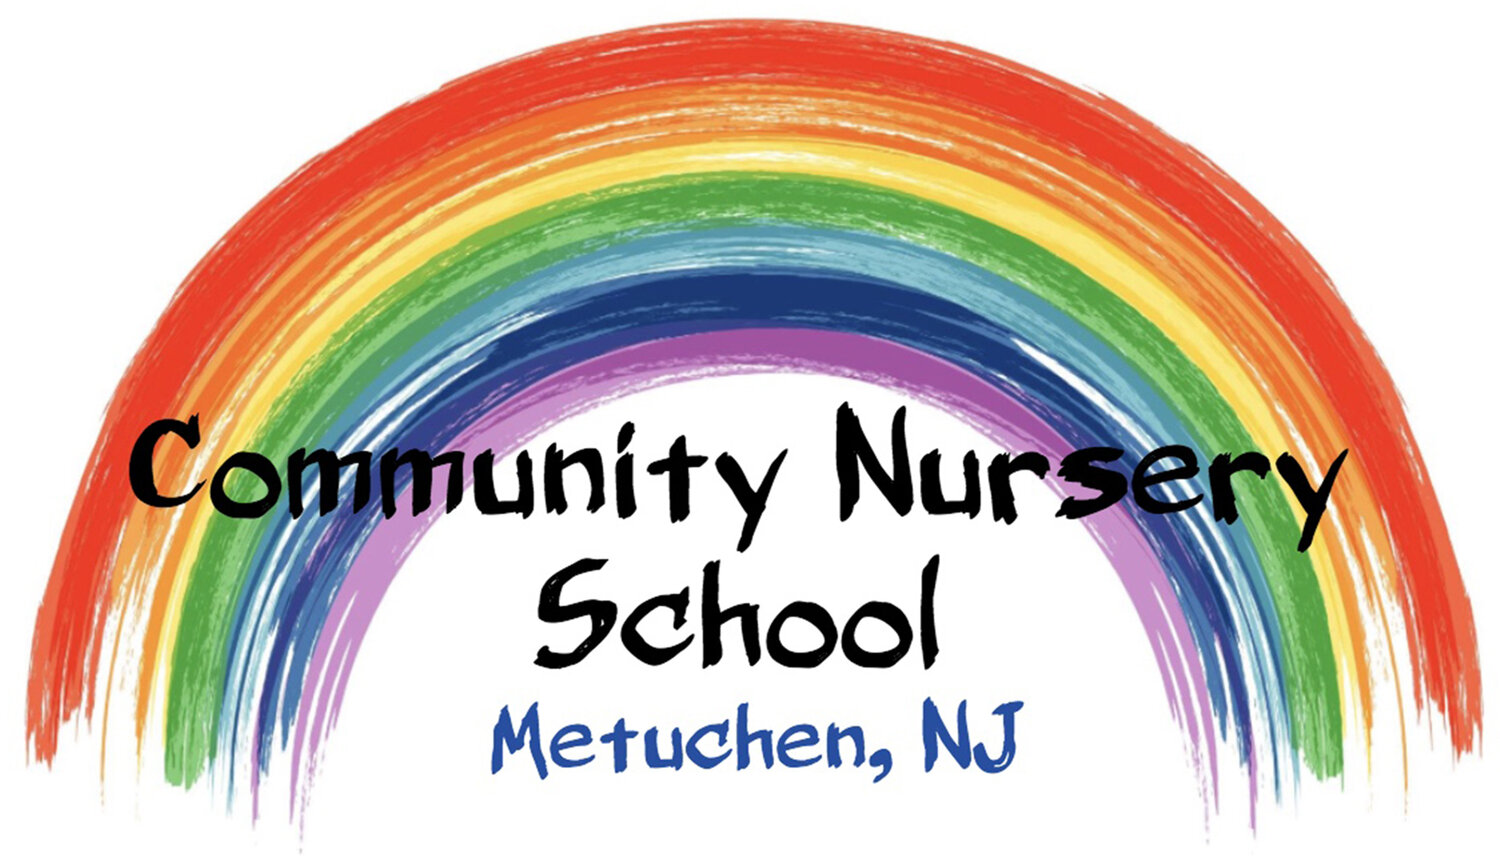 Community Nursery School